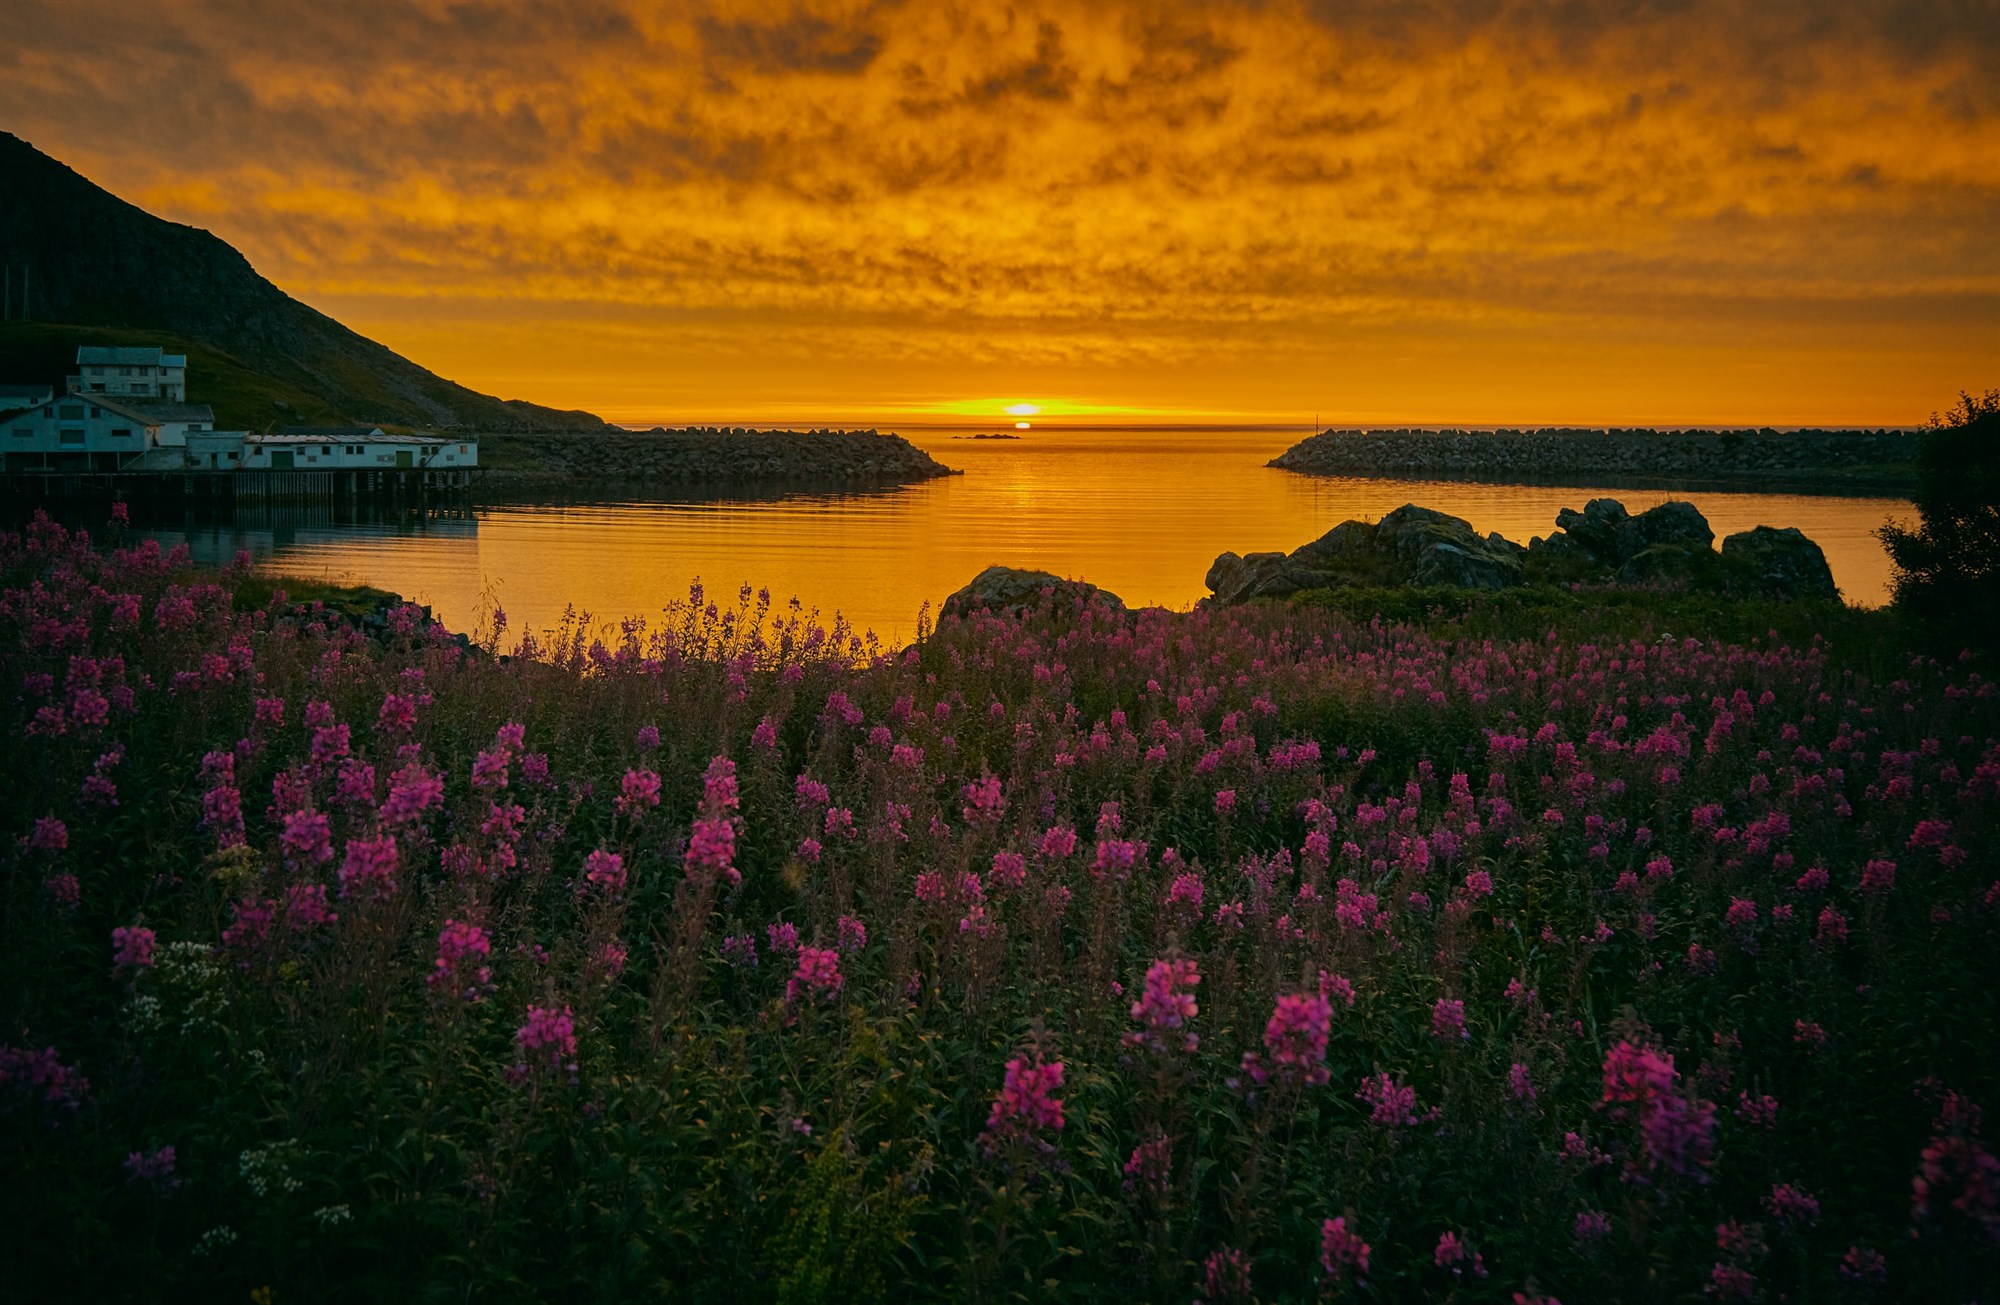 The Midnight Sun in Iceland